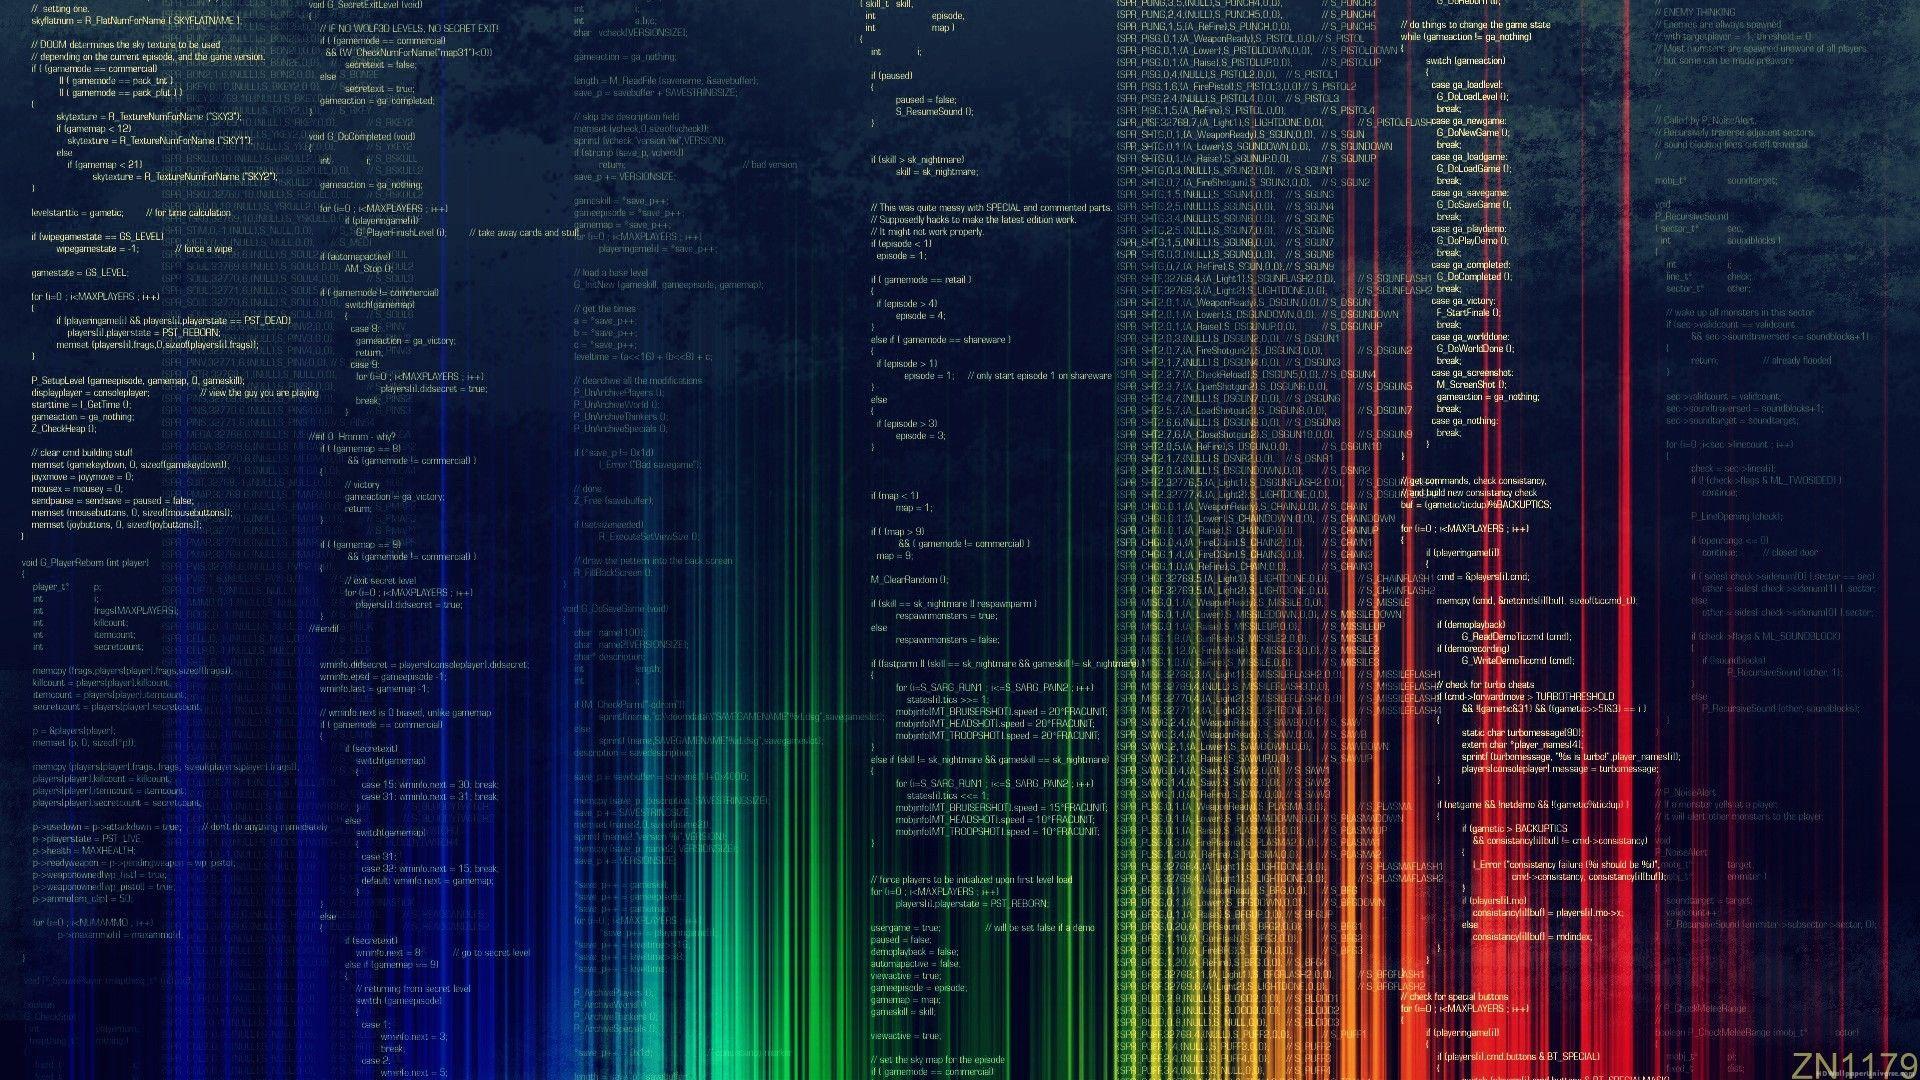 46 Programmers Wallpapers By PCbots ideas  programmer, computer programmer,  hacker wallpaper